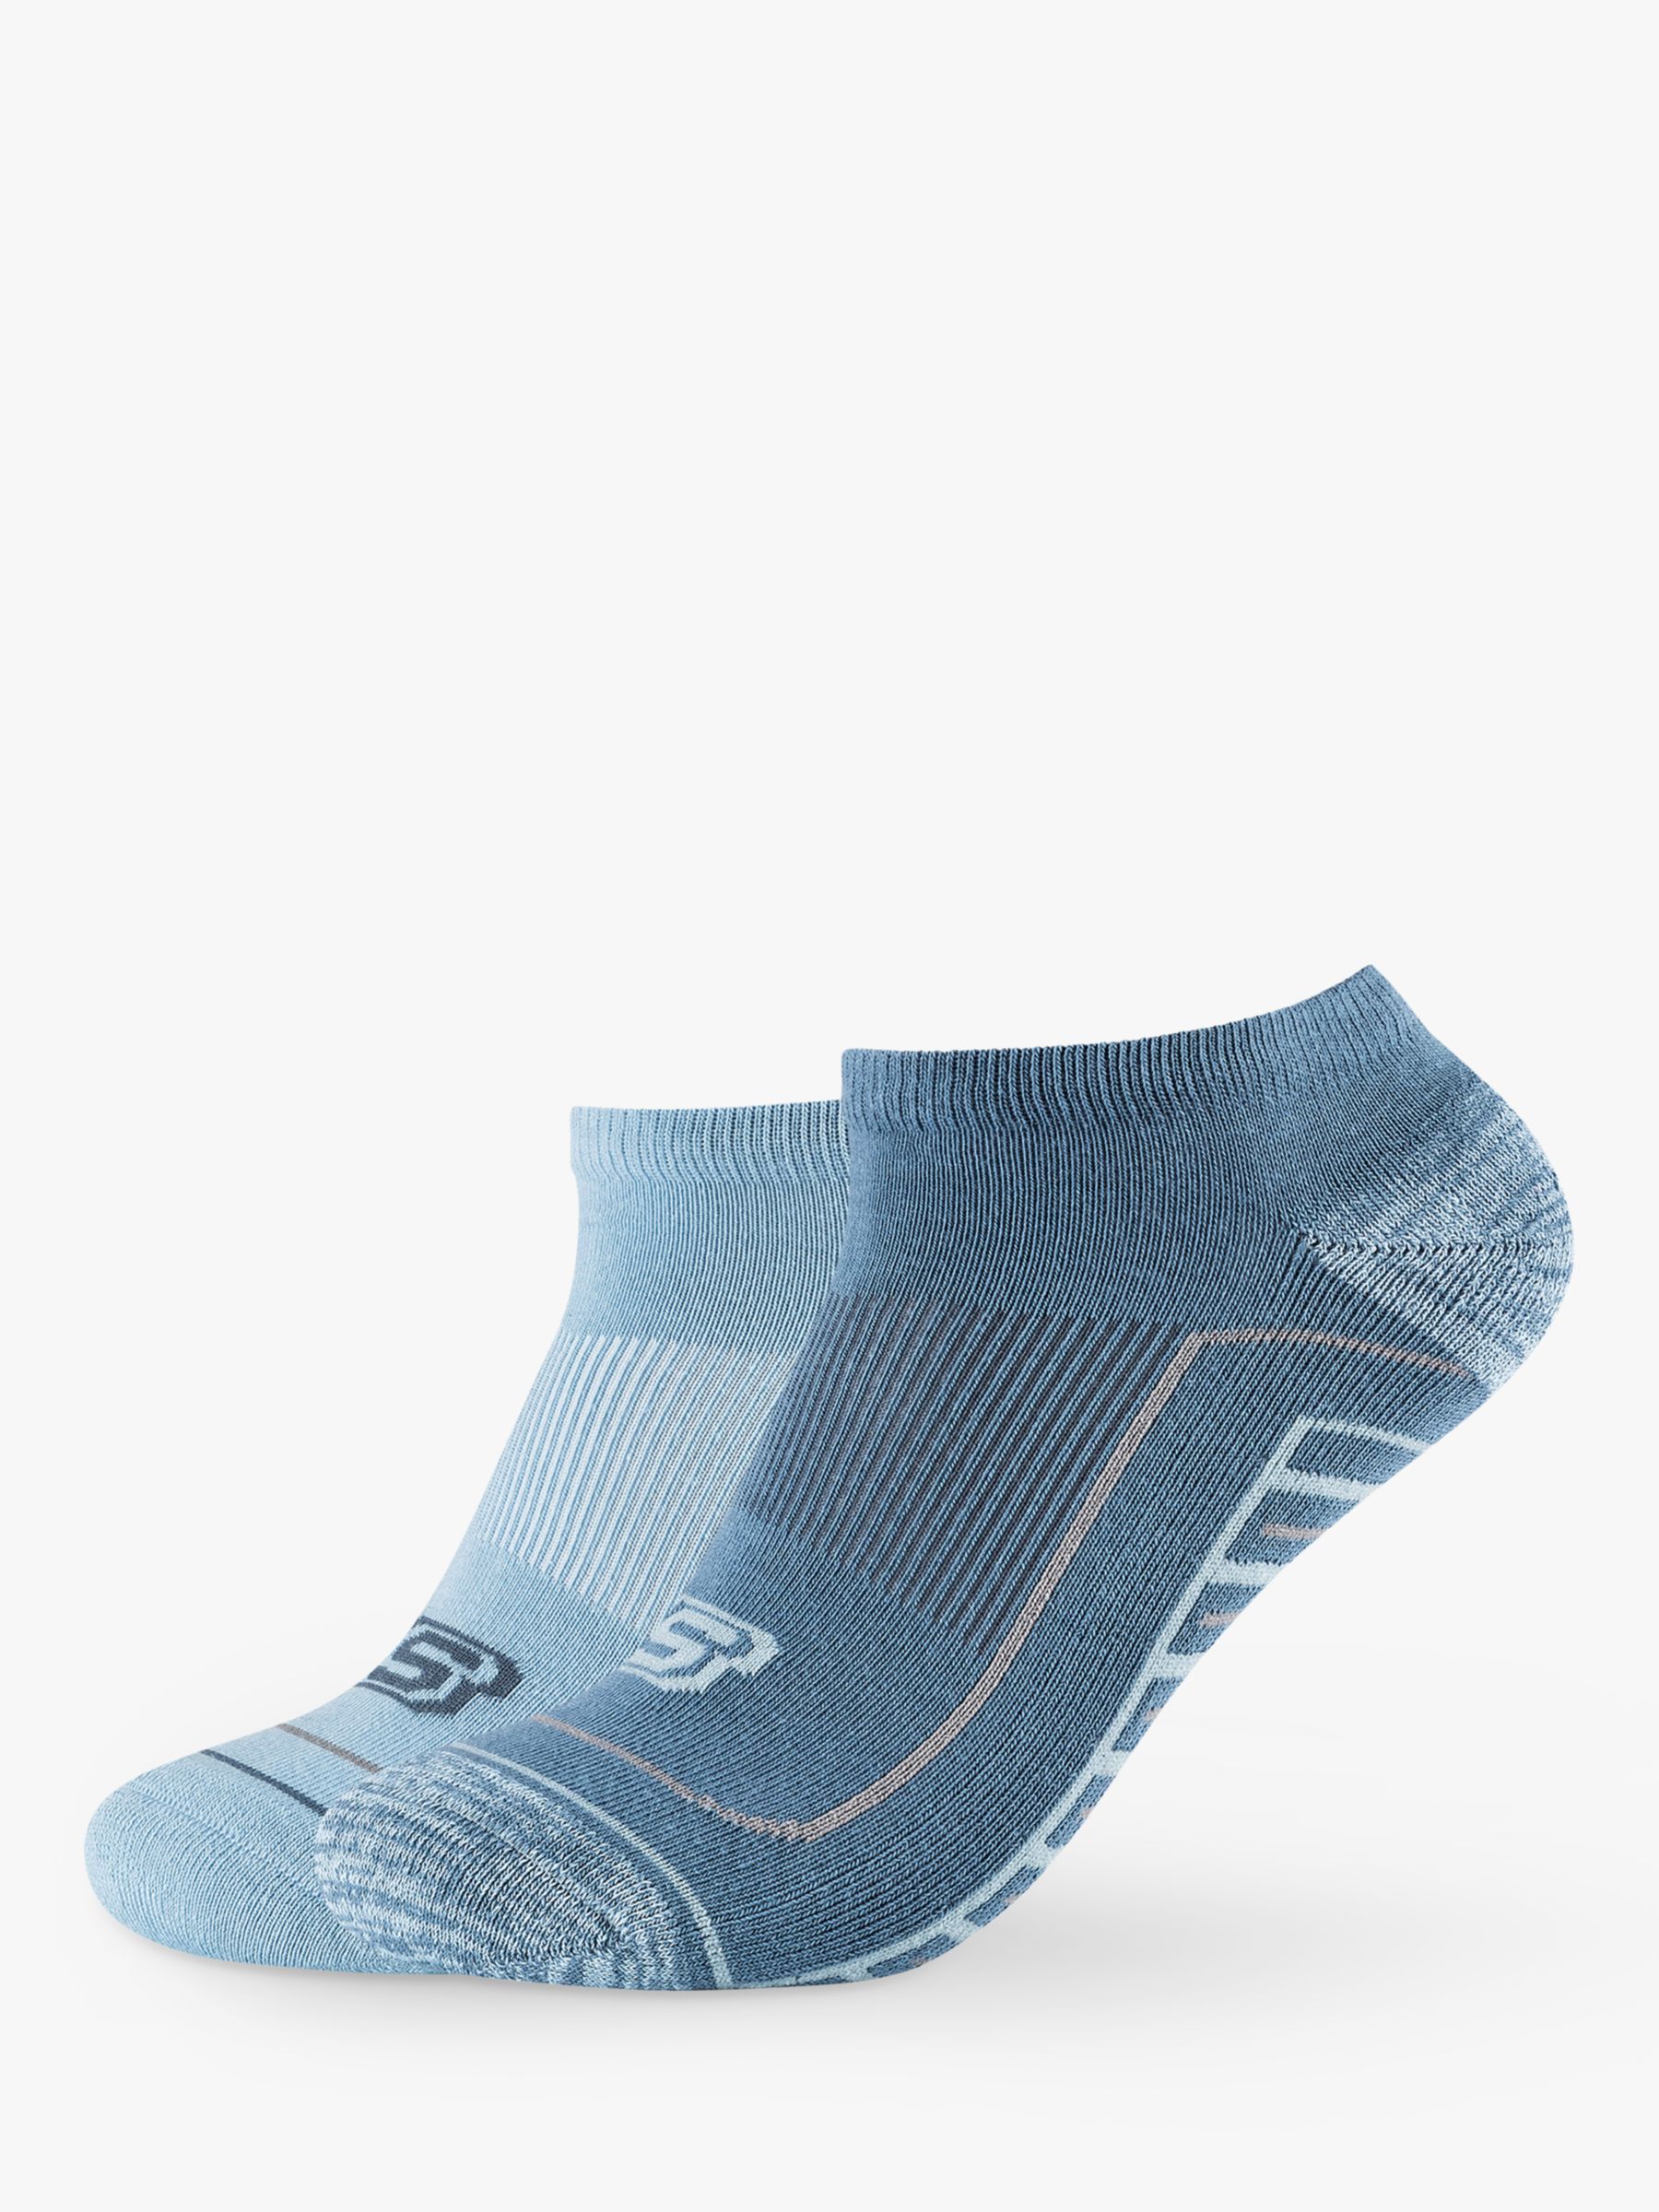 Skechers Cotton Rich Socks, Pack of 2, Blue, M-L